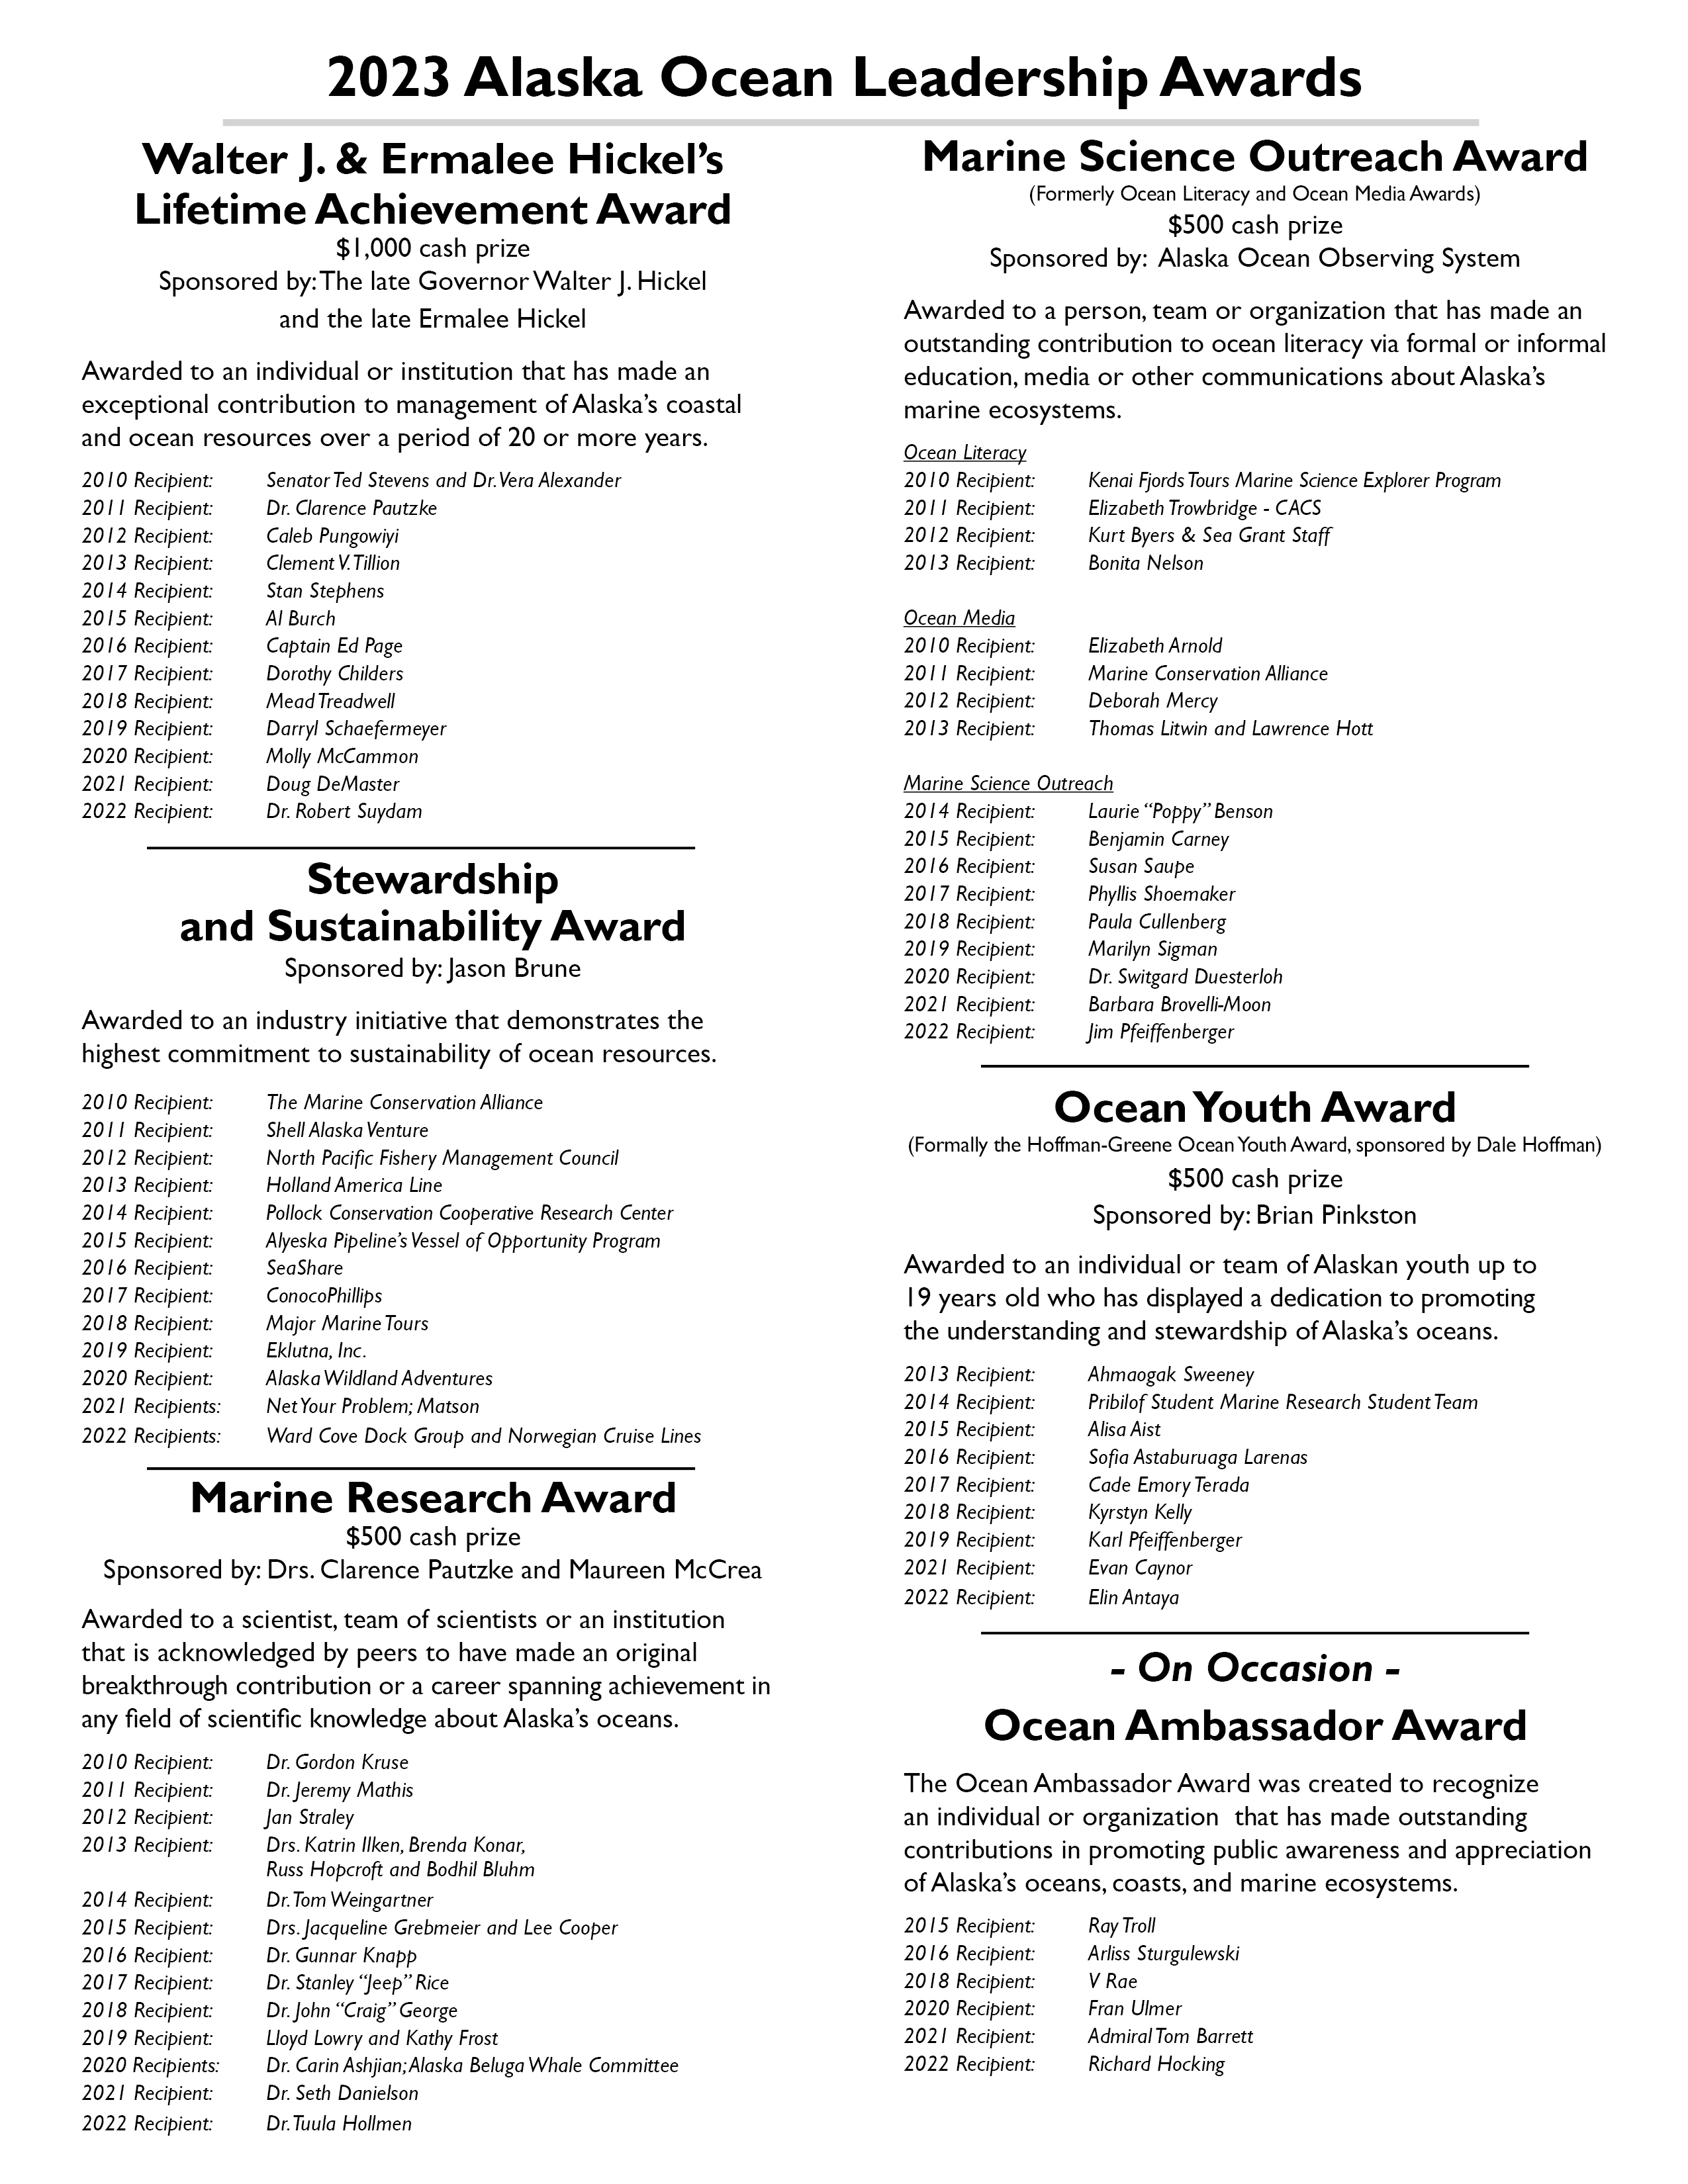 Past Ocean Leadership Award Winners